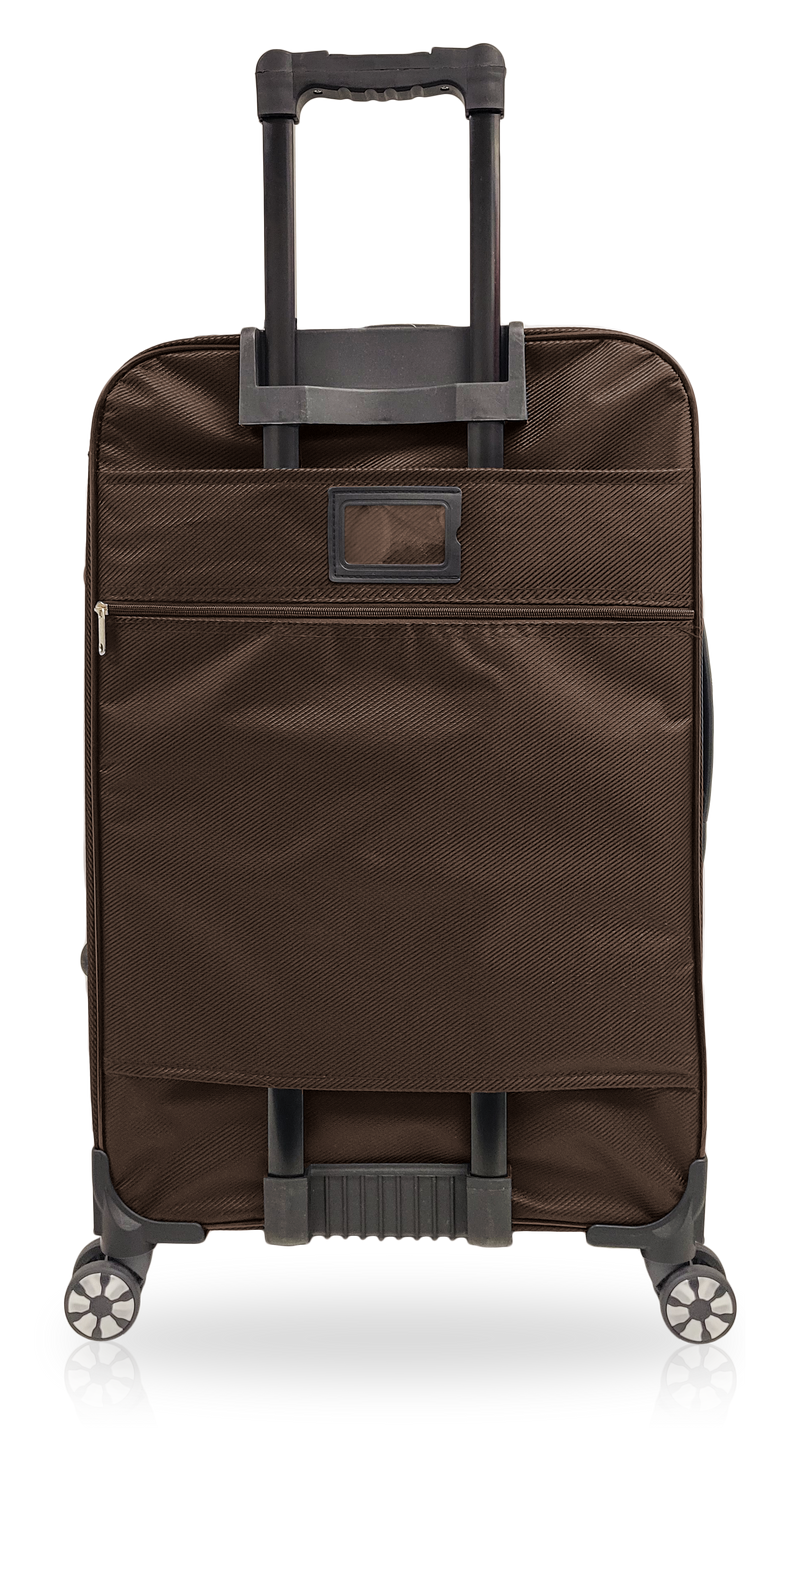 TOSCANO Aiutante 31-inch Lightweight Luggage Suitcase